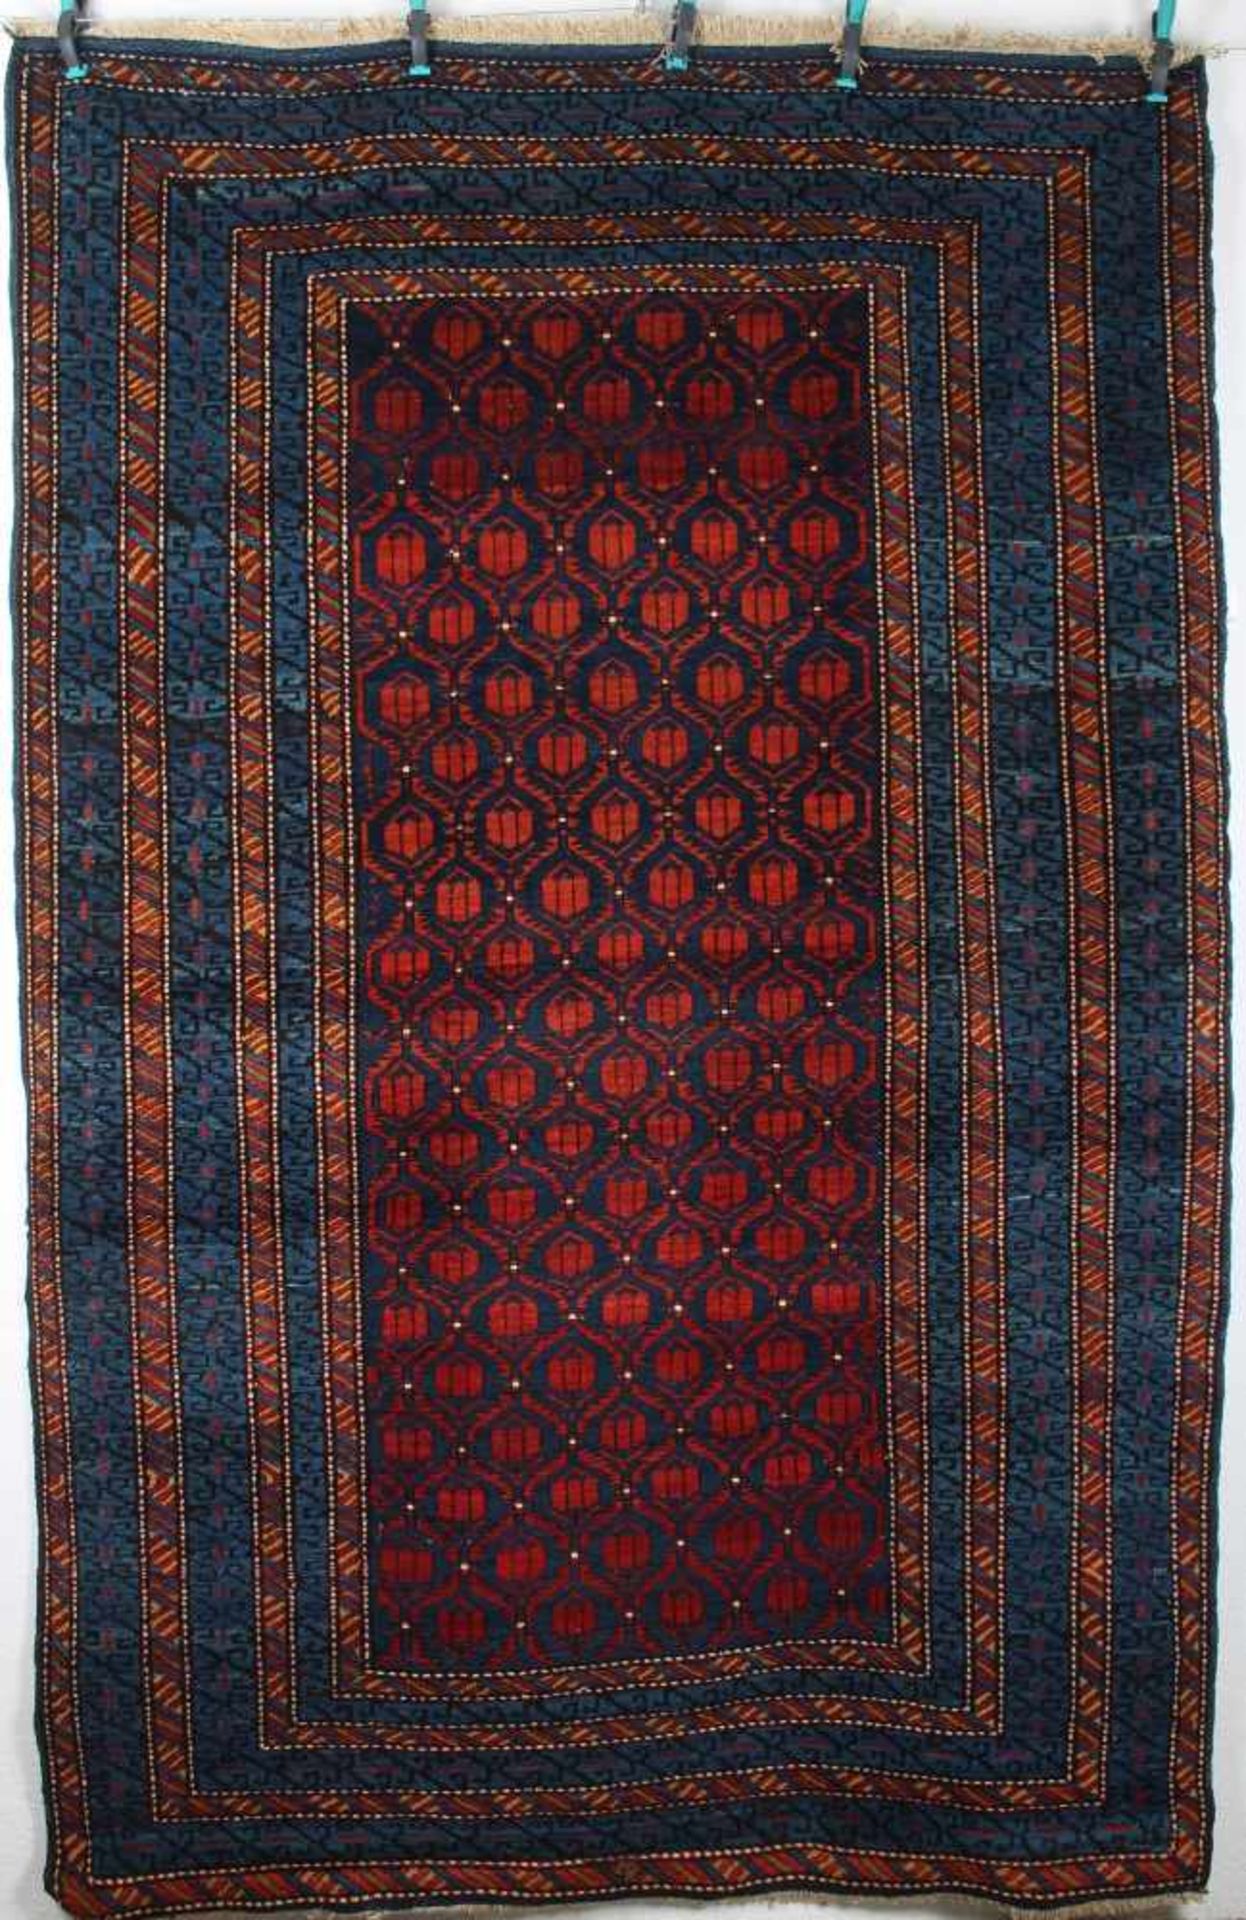 Antiker Tschi - Tschi Kaukasus Teppich, antique kazak carpet,